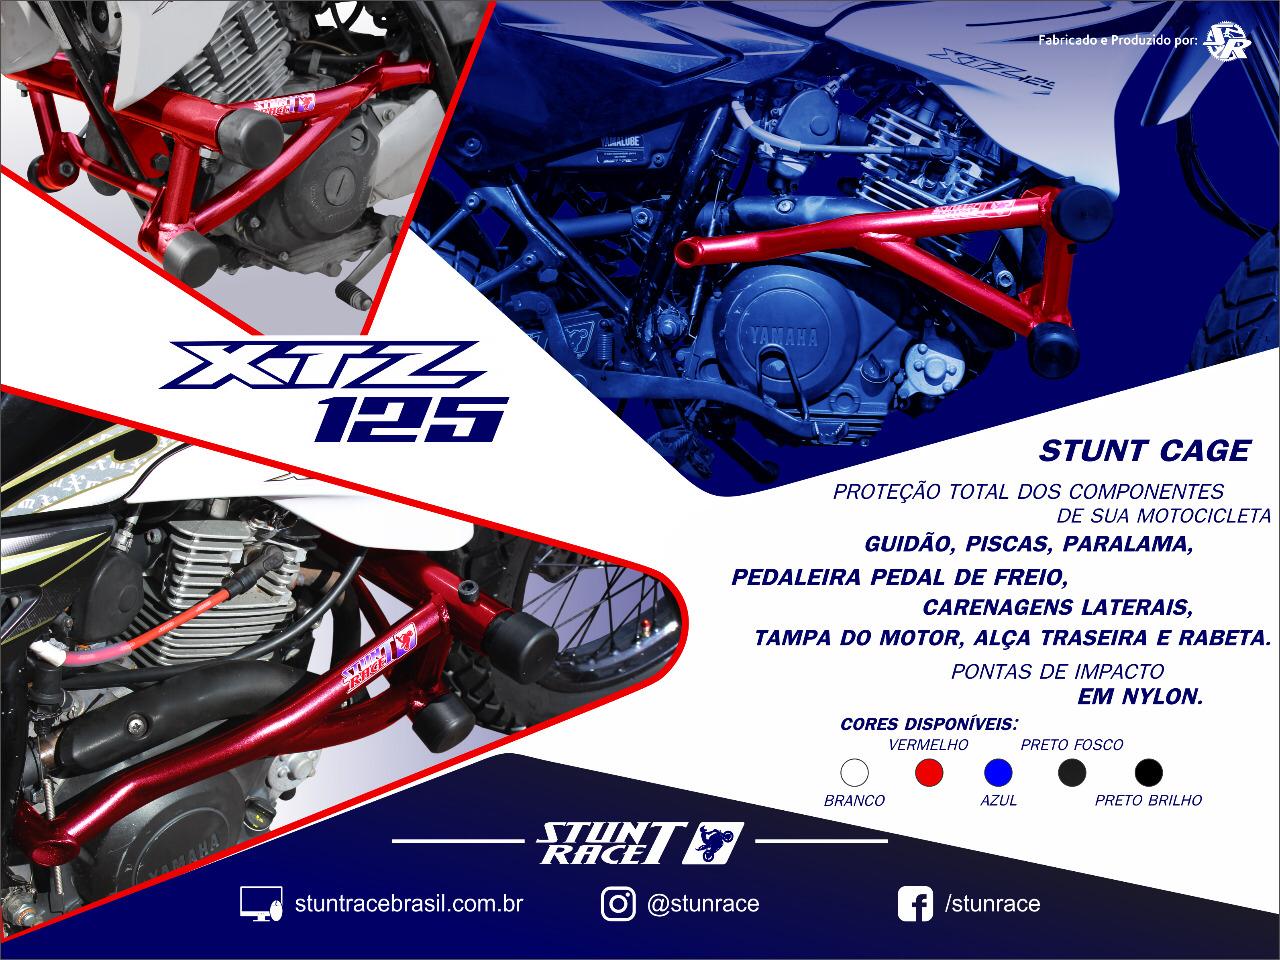 STUNT CAGE CG160 FAN TODOS OS ANOS. – Stunt Race Brasil